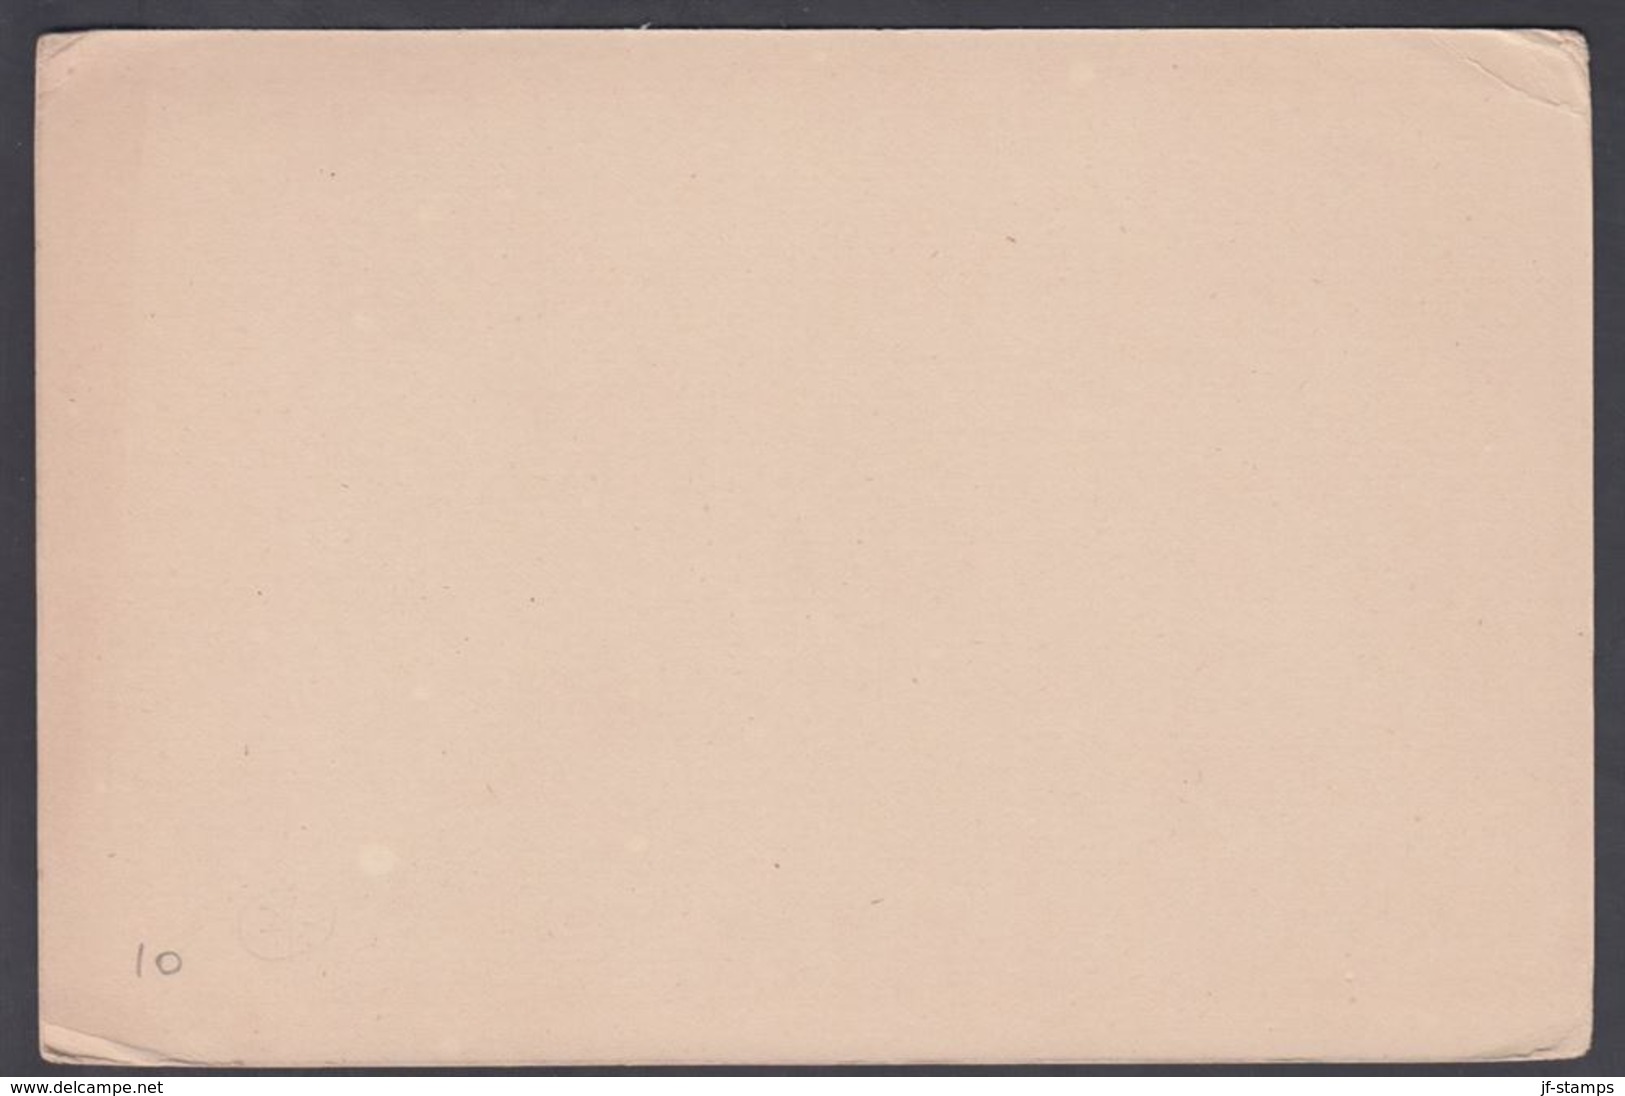 1880. QUEENSLAND AUSTRALIA  ONE PENNY POST CARD VICTORIA. () - JF321605 - Storia Postale